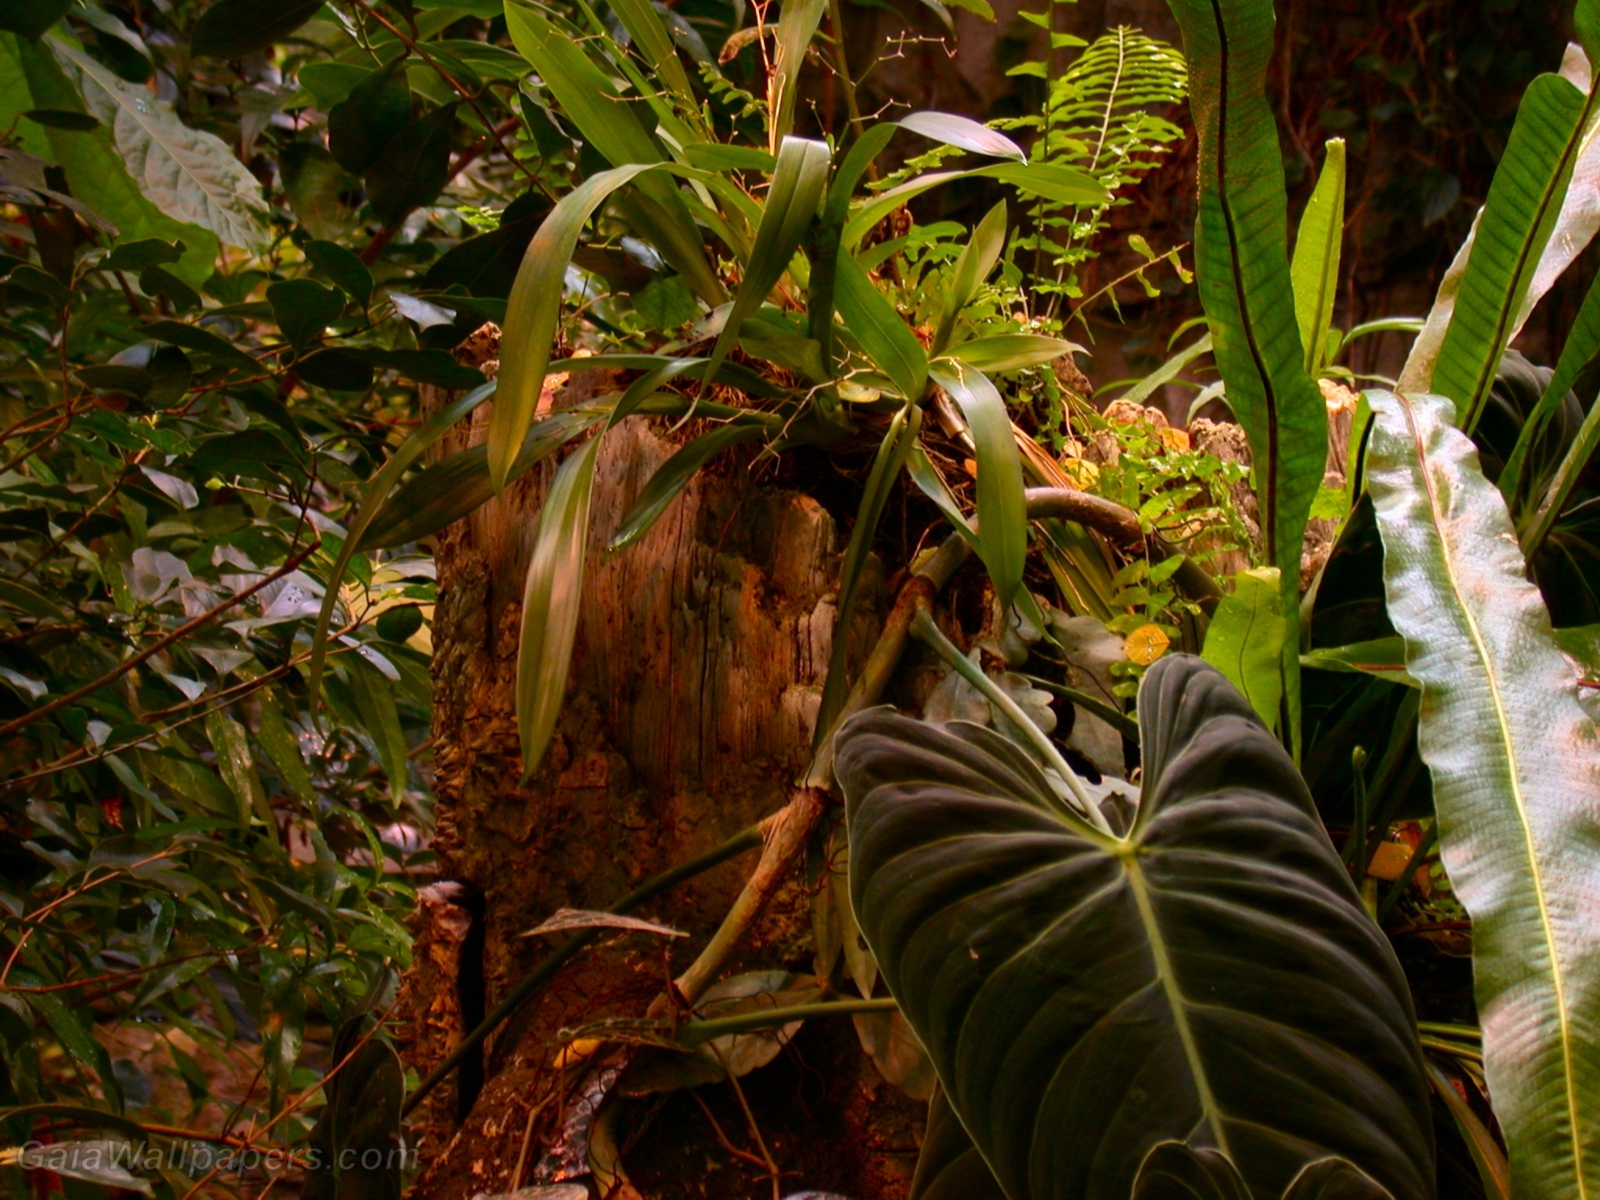 Plantes tropicales - Fonds d'écran gratuits